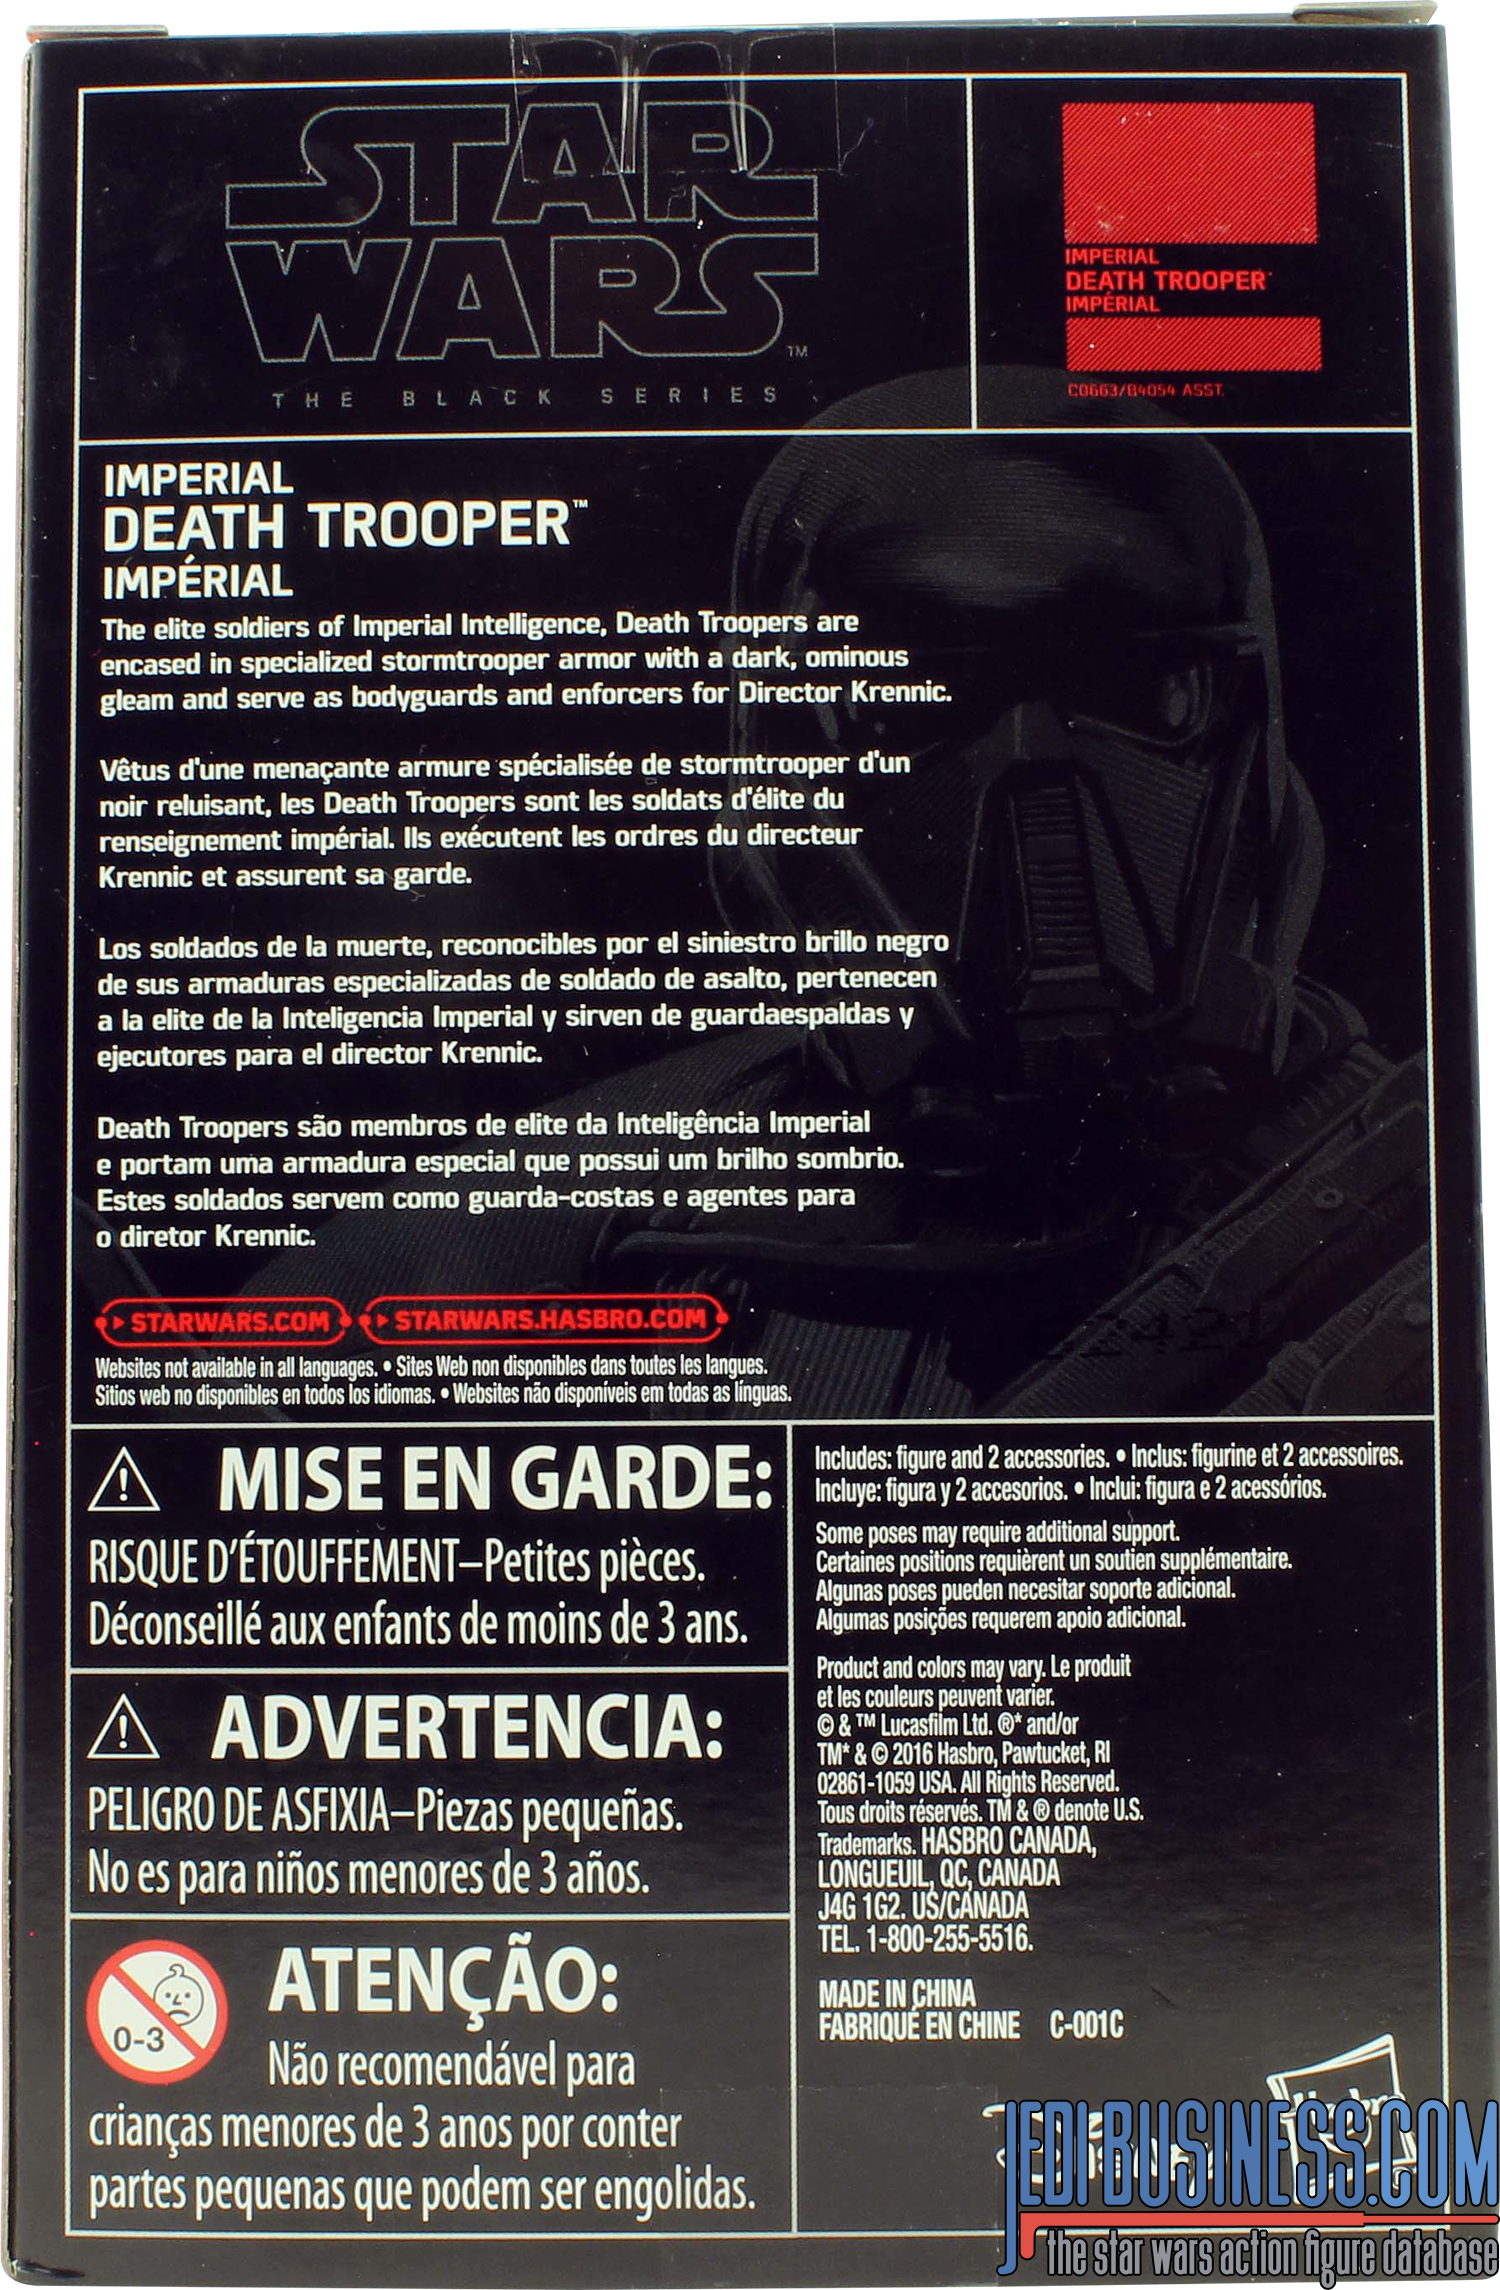 Death Trooper Specialist